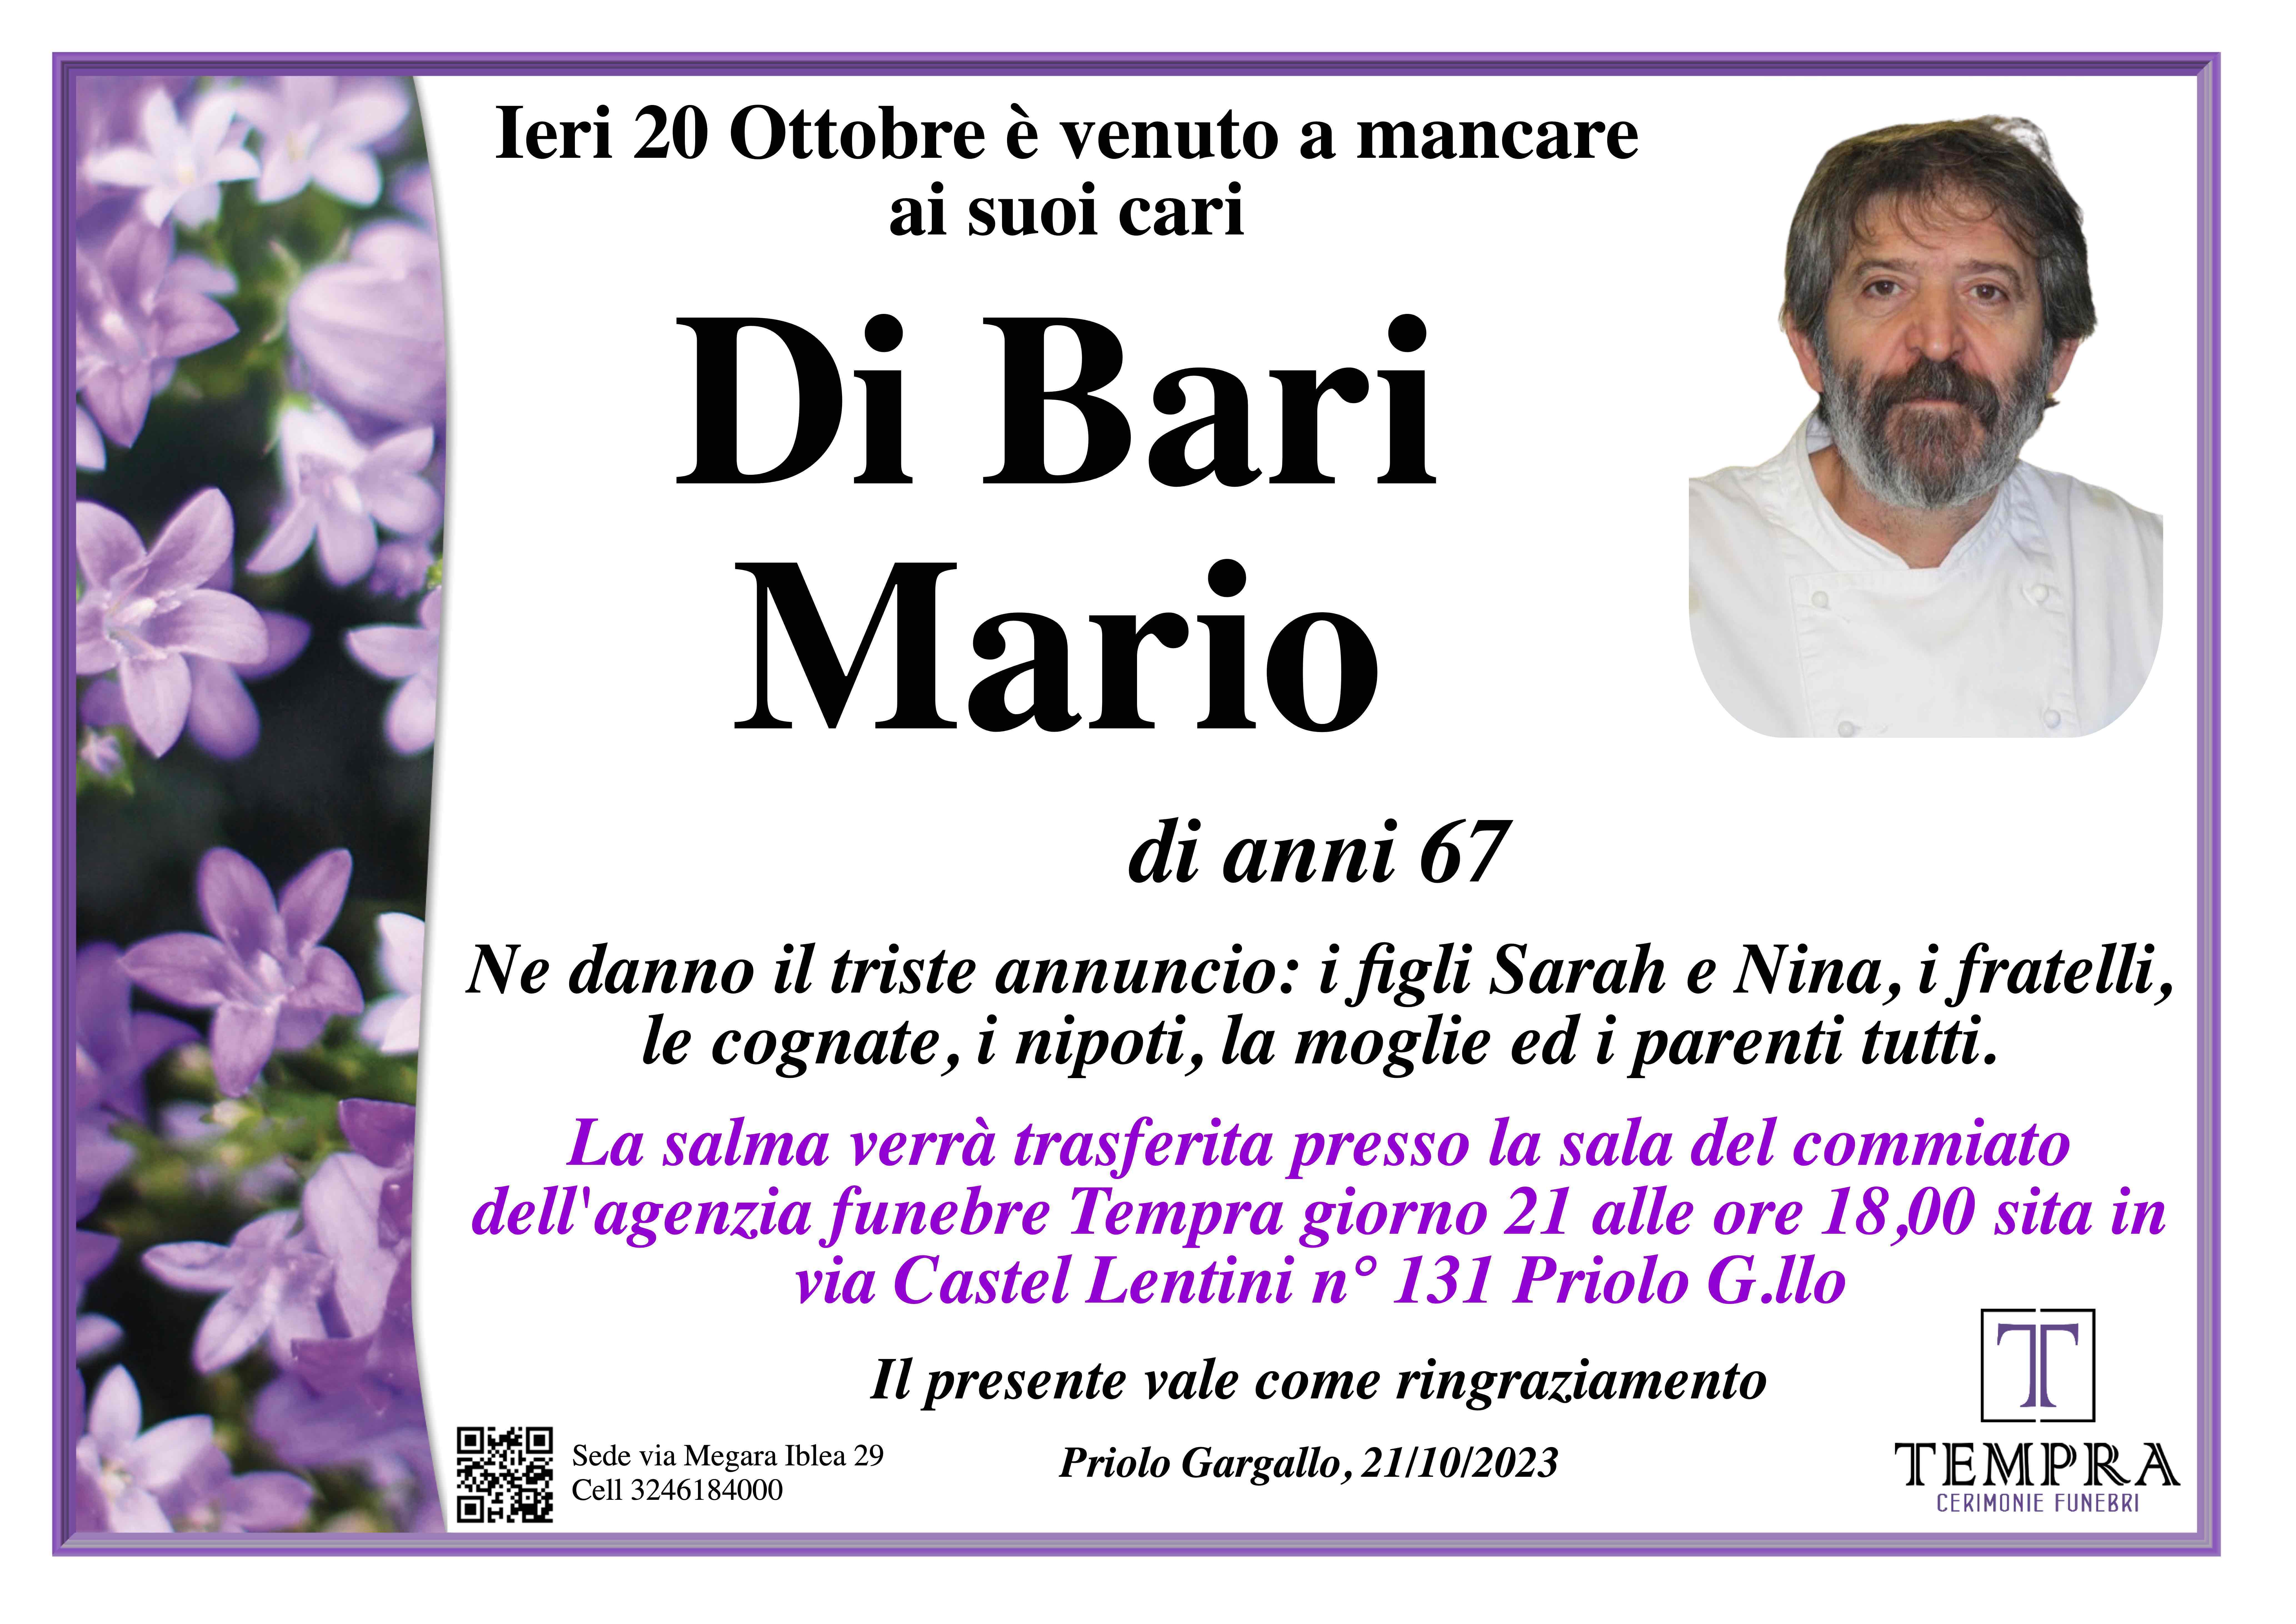 Mario Di Bari